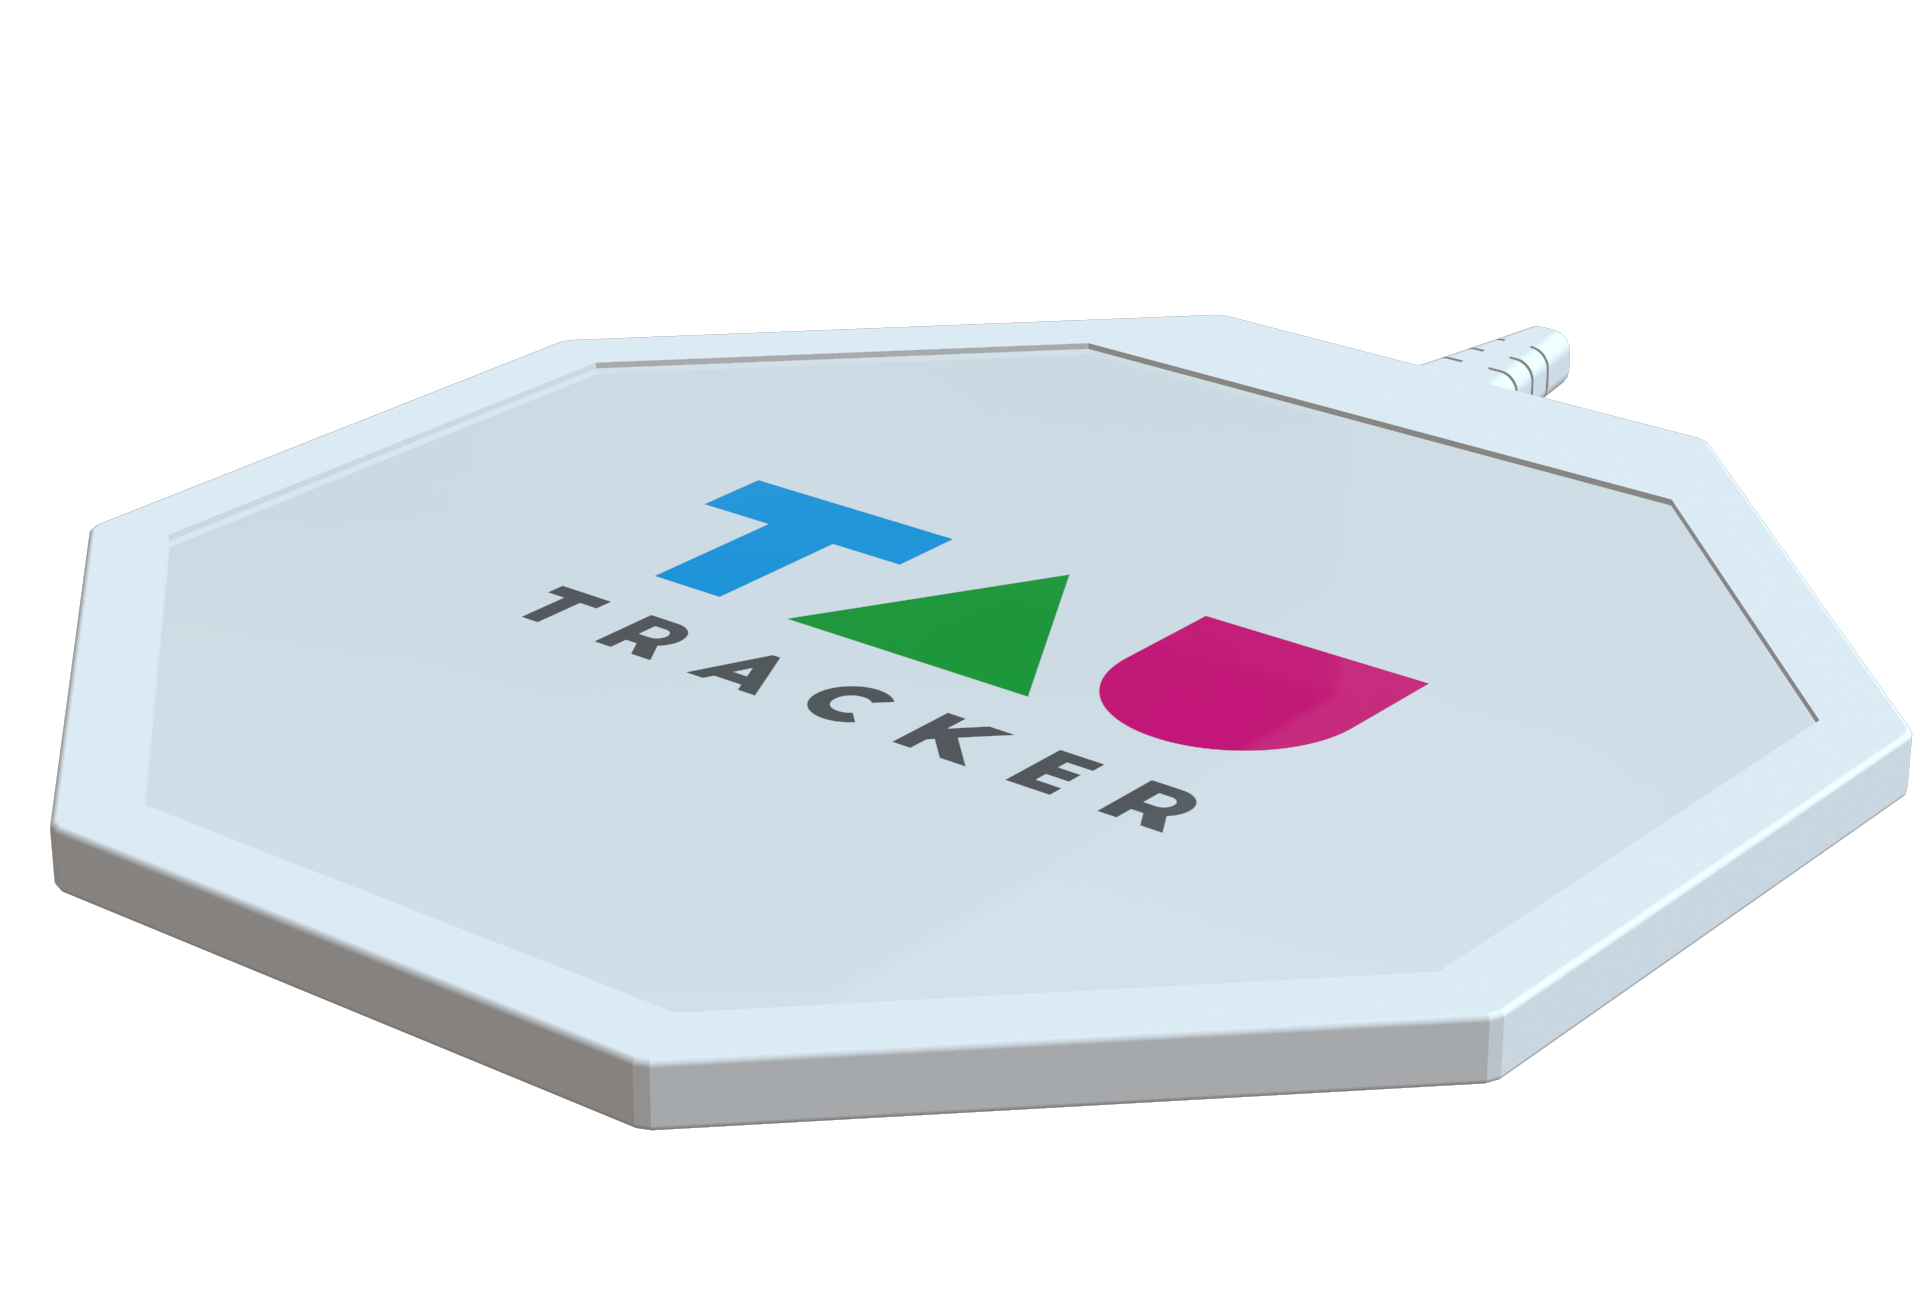 TAU tracker